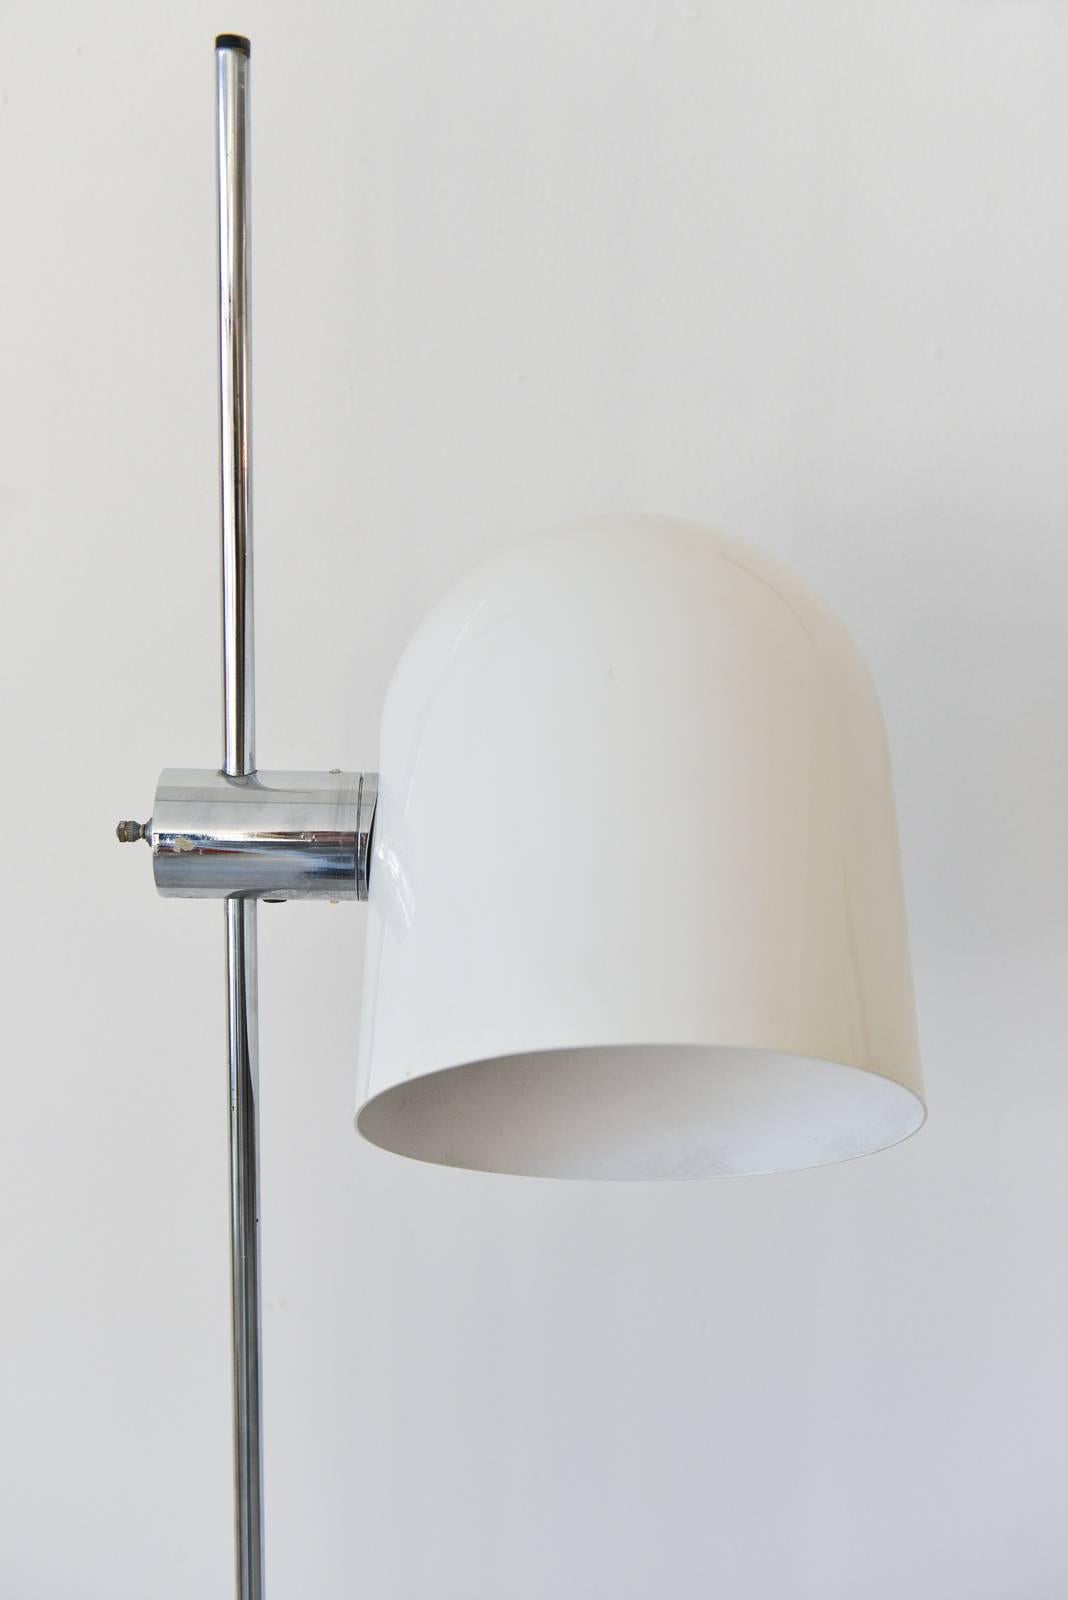 Standing floor lamp by Robert Sonneman, circa 1970. White enamel can light, chrome stem and pivoting head. Original wiring. Working condition.

Adjustable head

Measures: 65.5" height x 8" diameter.